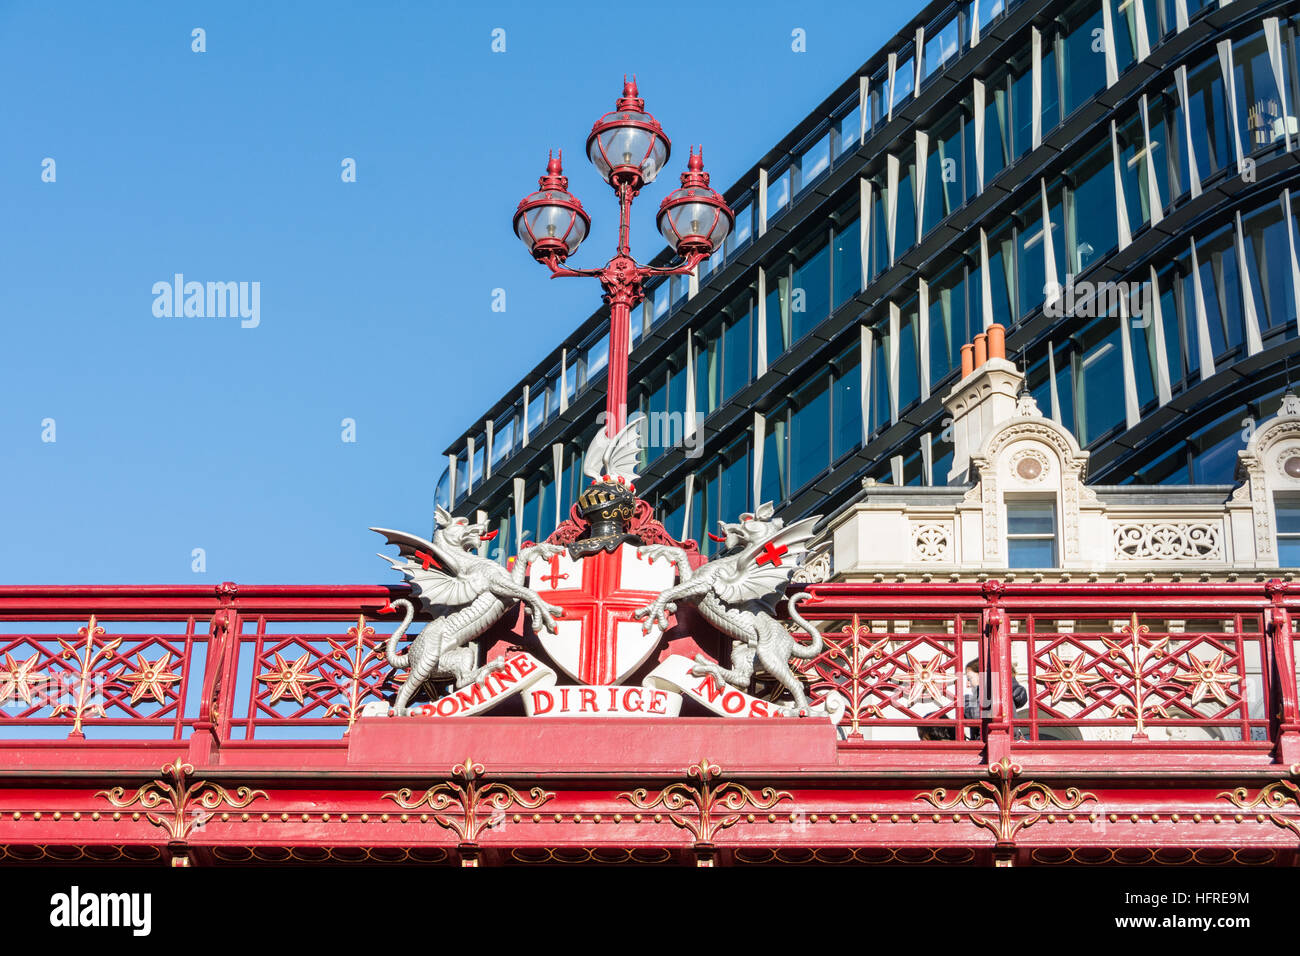 Holborn Viaduct, Farringdon Street, London, EC4, England, U.K. Stock Photo